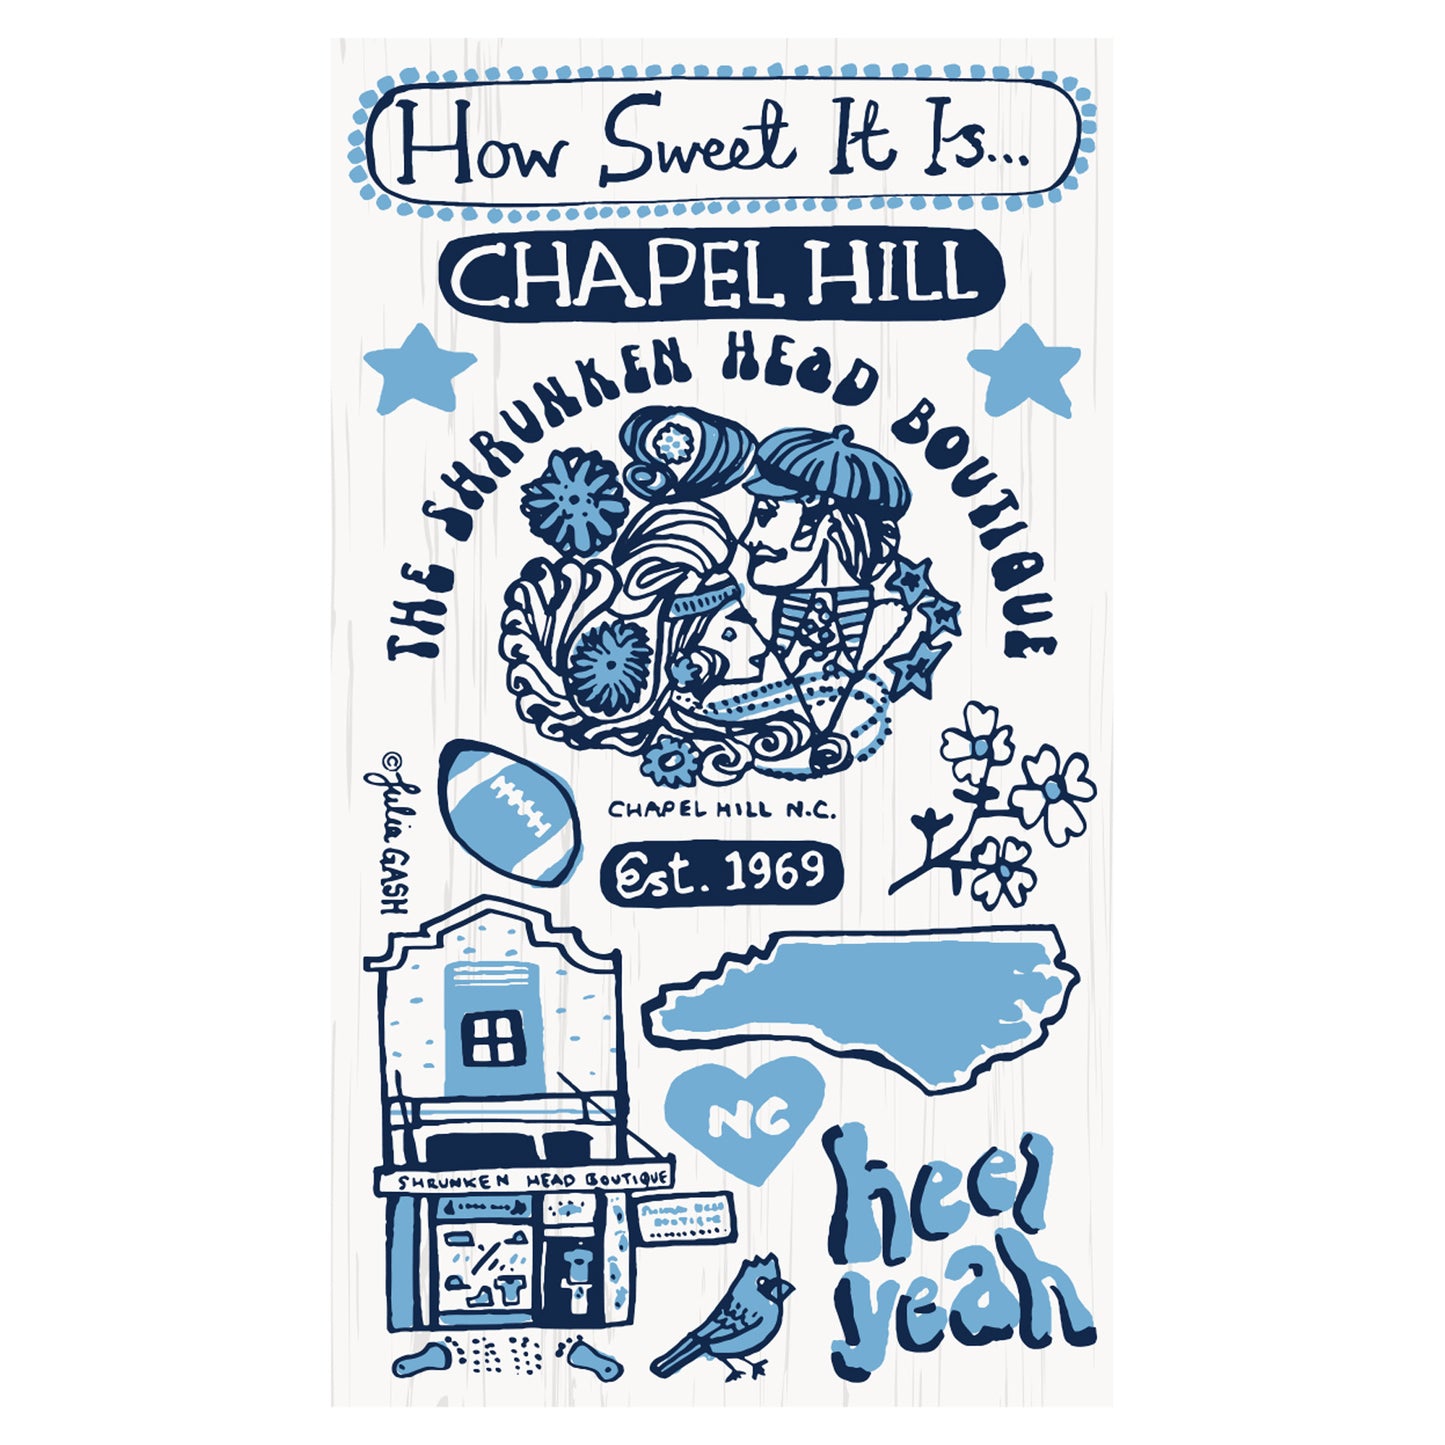 Chapel Hill SHB Wooden Magnet by Julia Gash